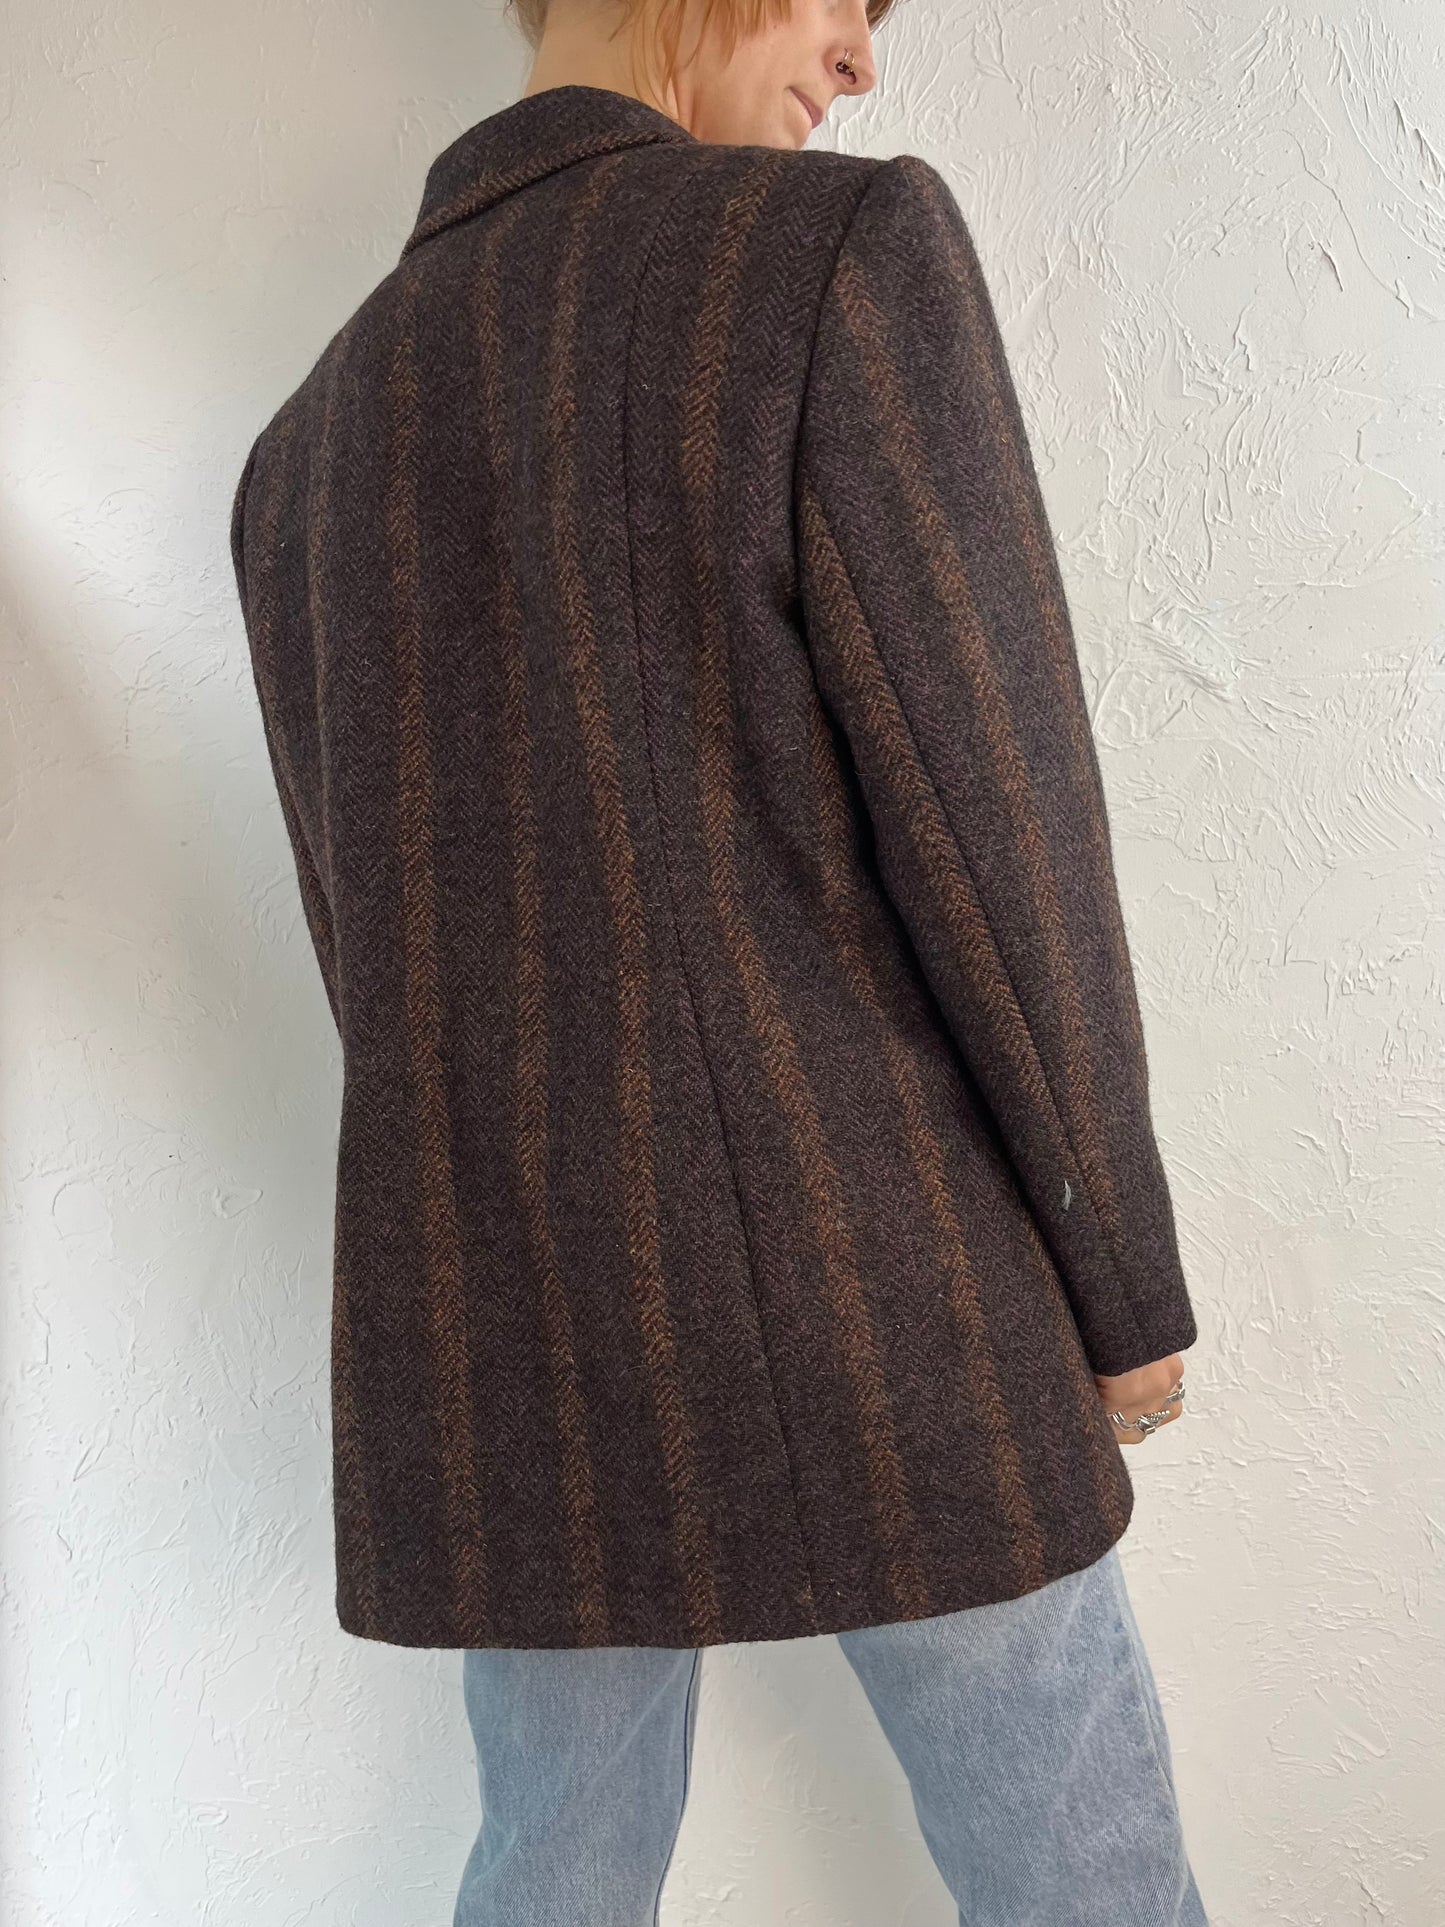 90s Herringbone Wool Jacket / Medium - Large